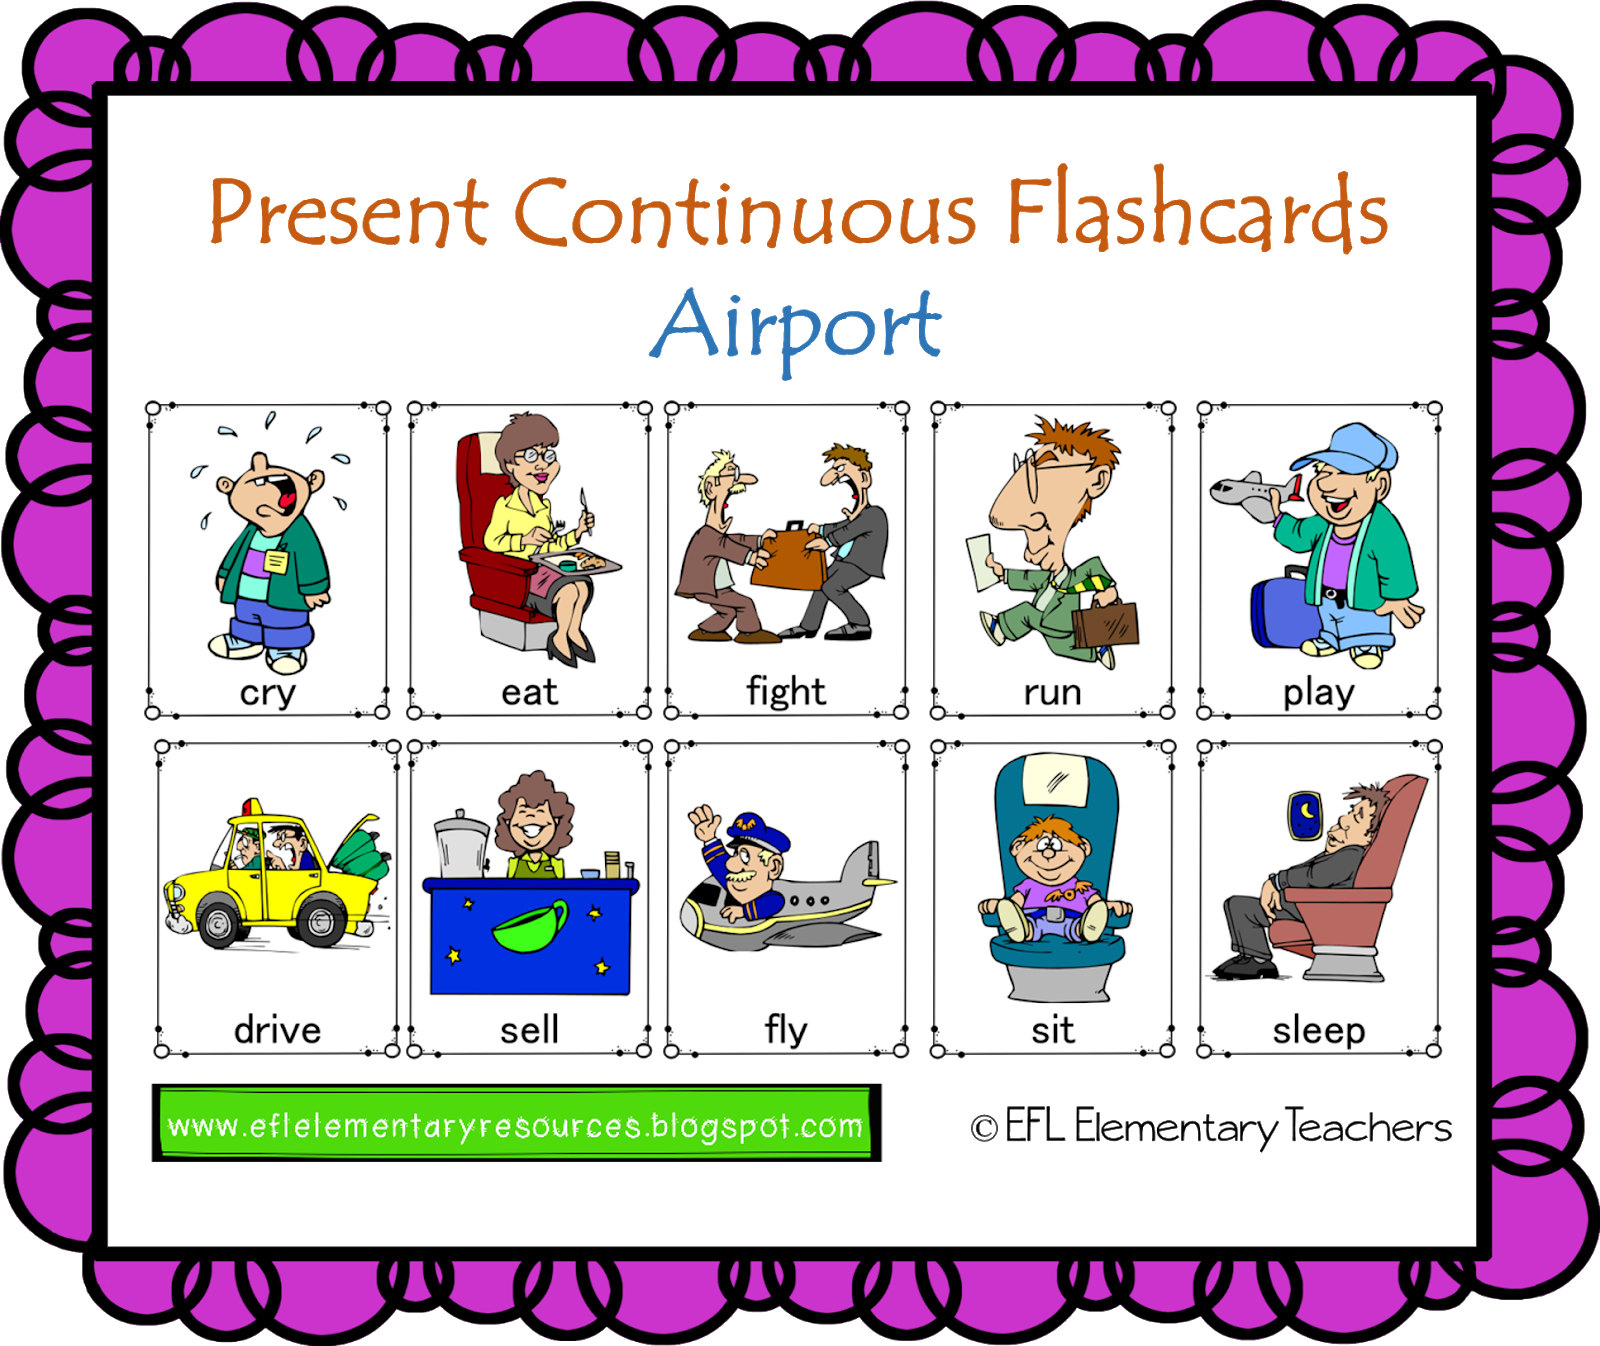 Continuous game for kids. Present Continuous. Present Continuous упражнения с картинками. Present Continuous карточки. Картинки для present Continuous для детей.